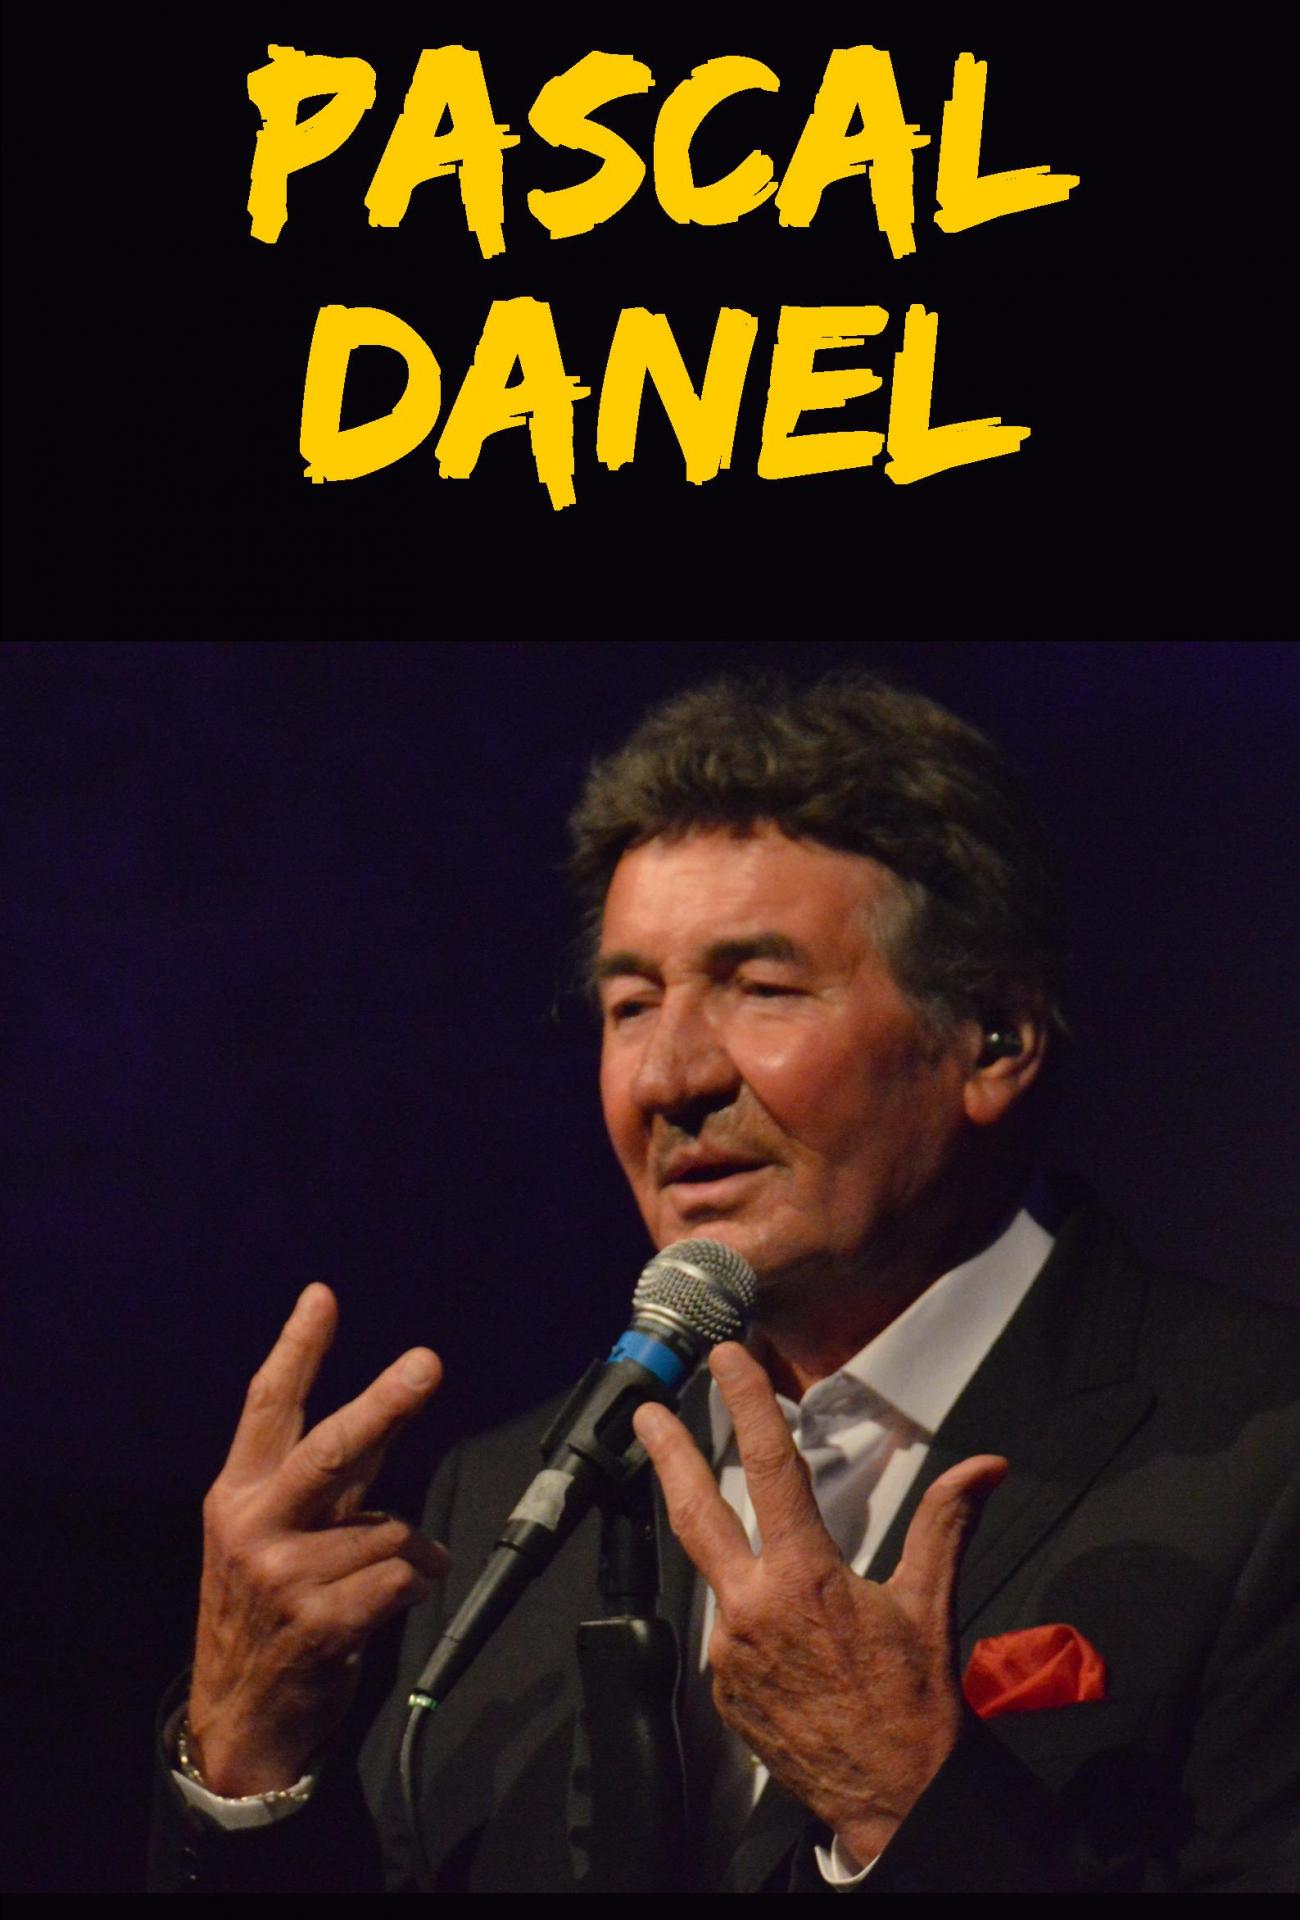 Pascal danel web